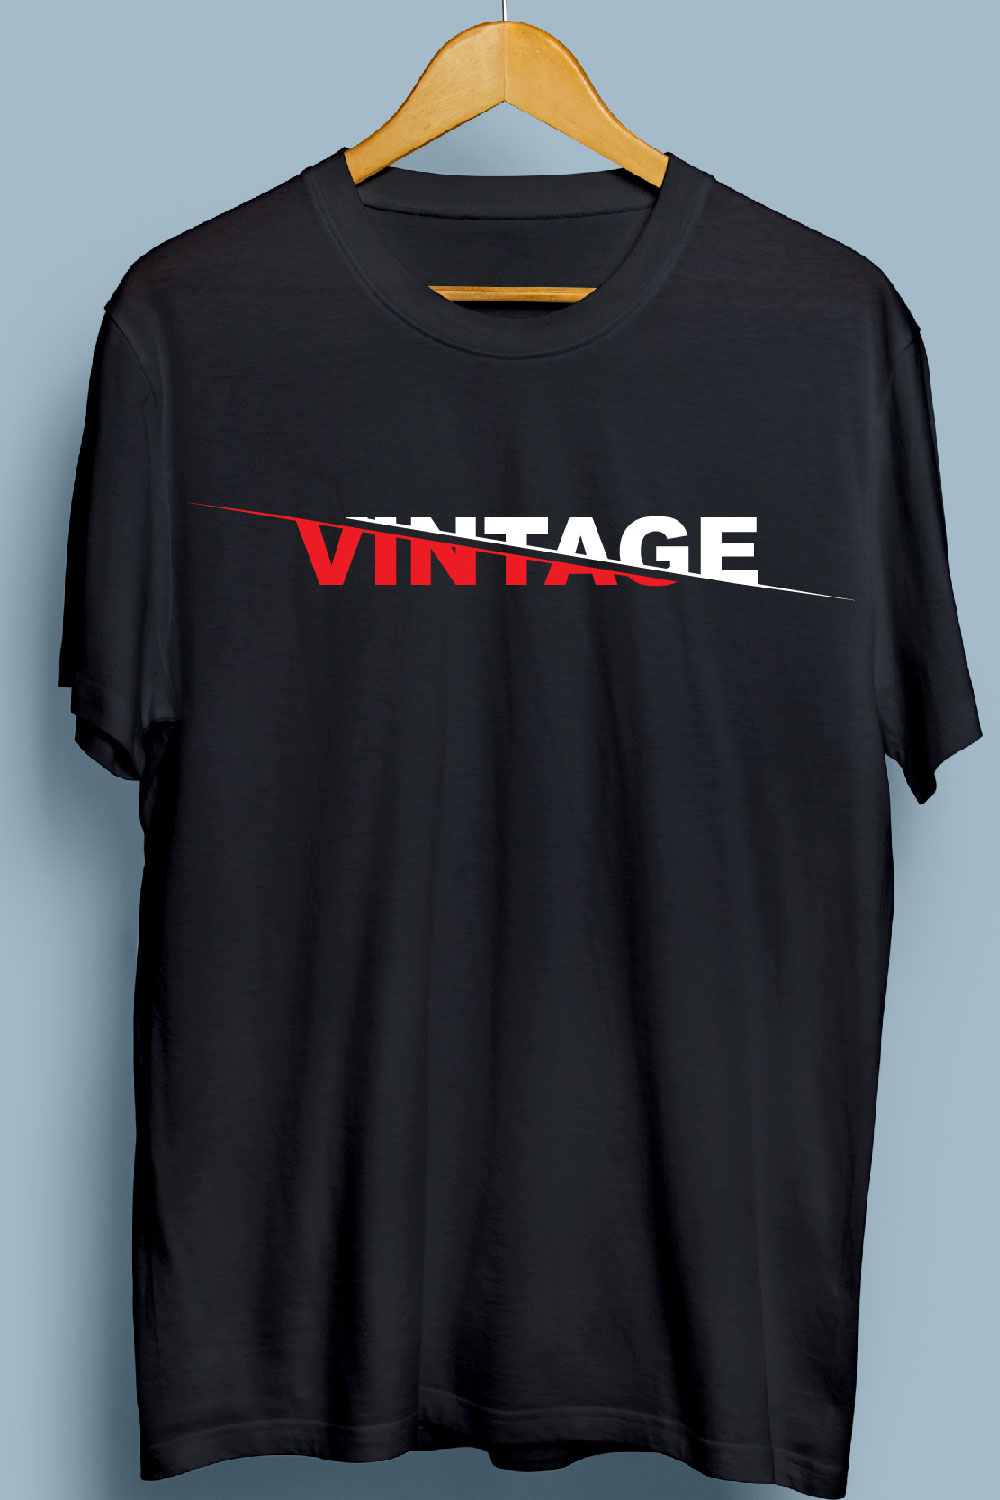 Vintage t shirt design pinterest preview image.